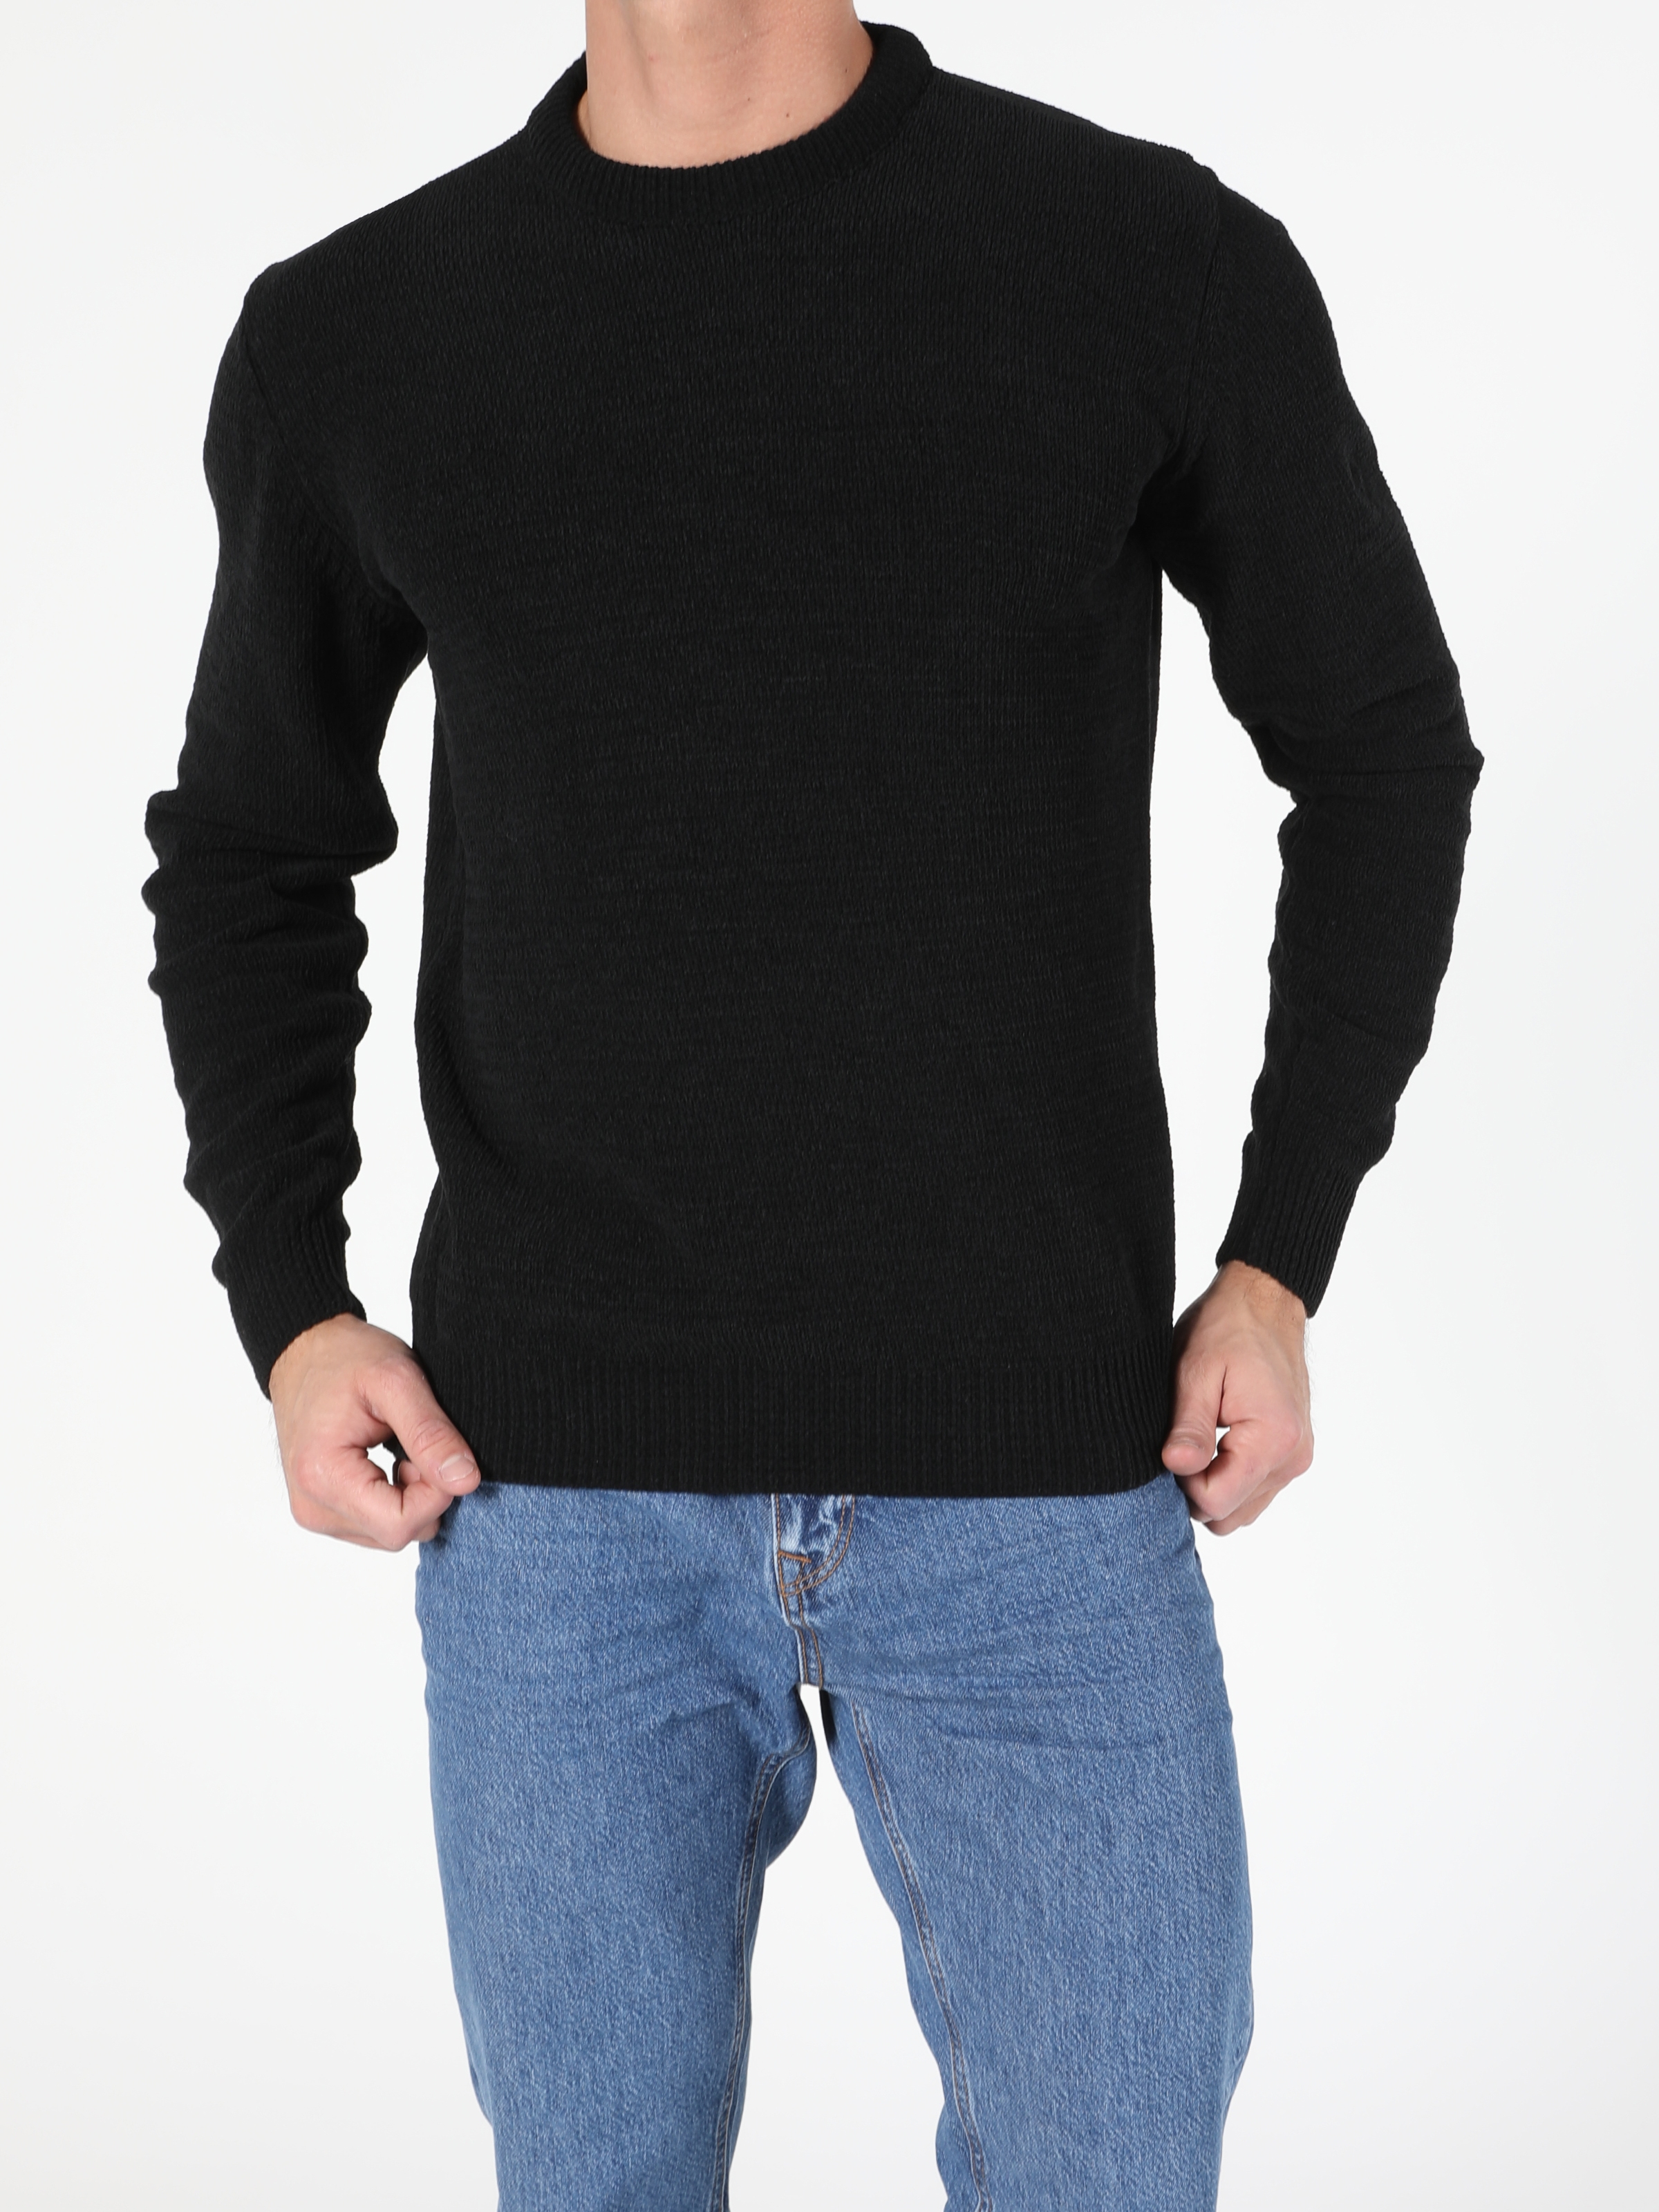 Colins Black Men Sweaters. 4